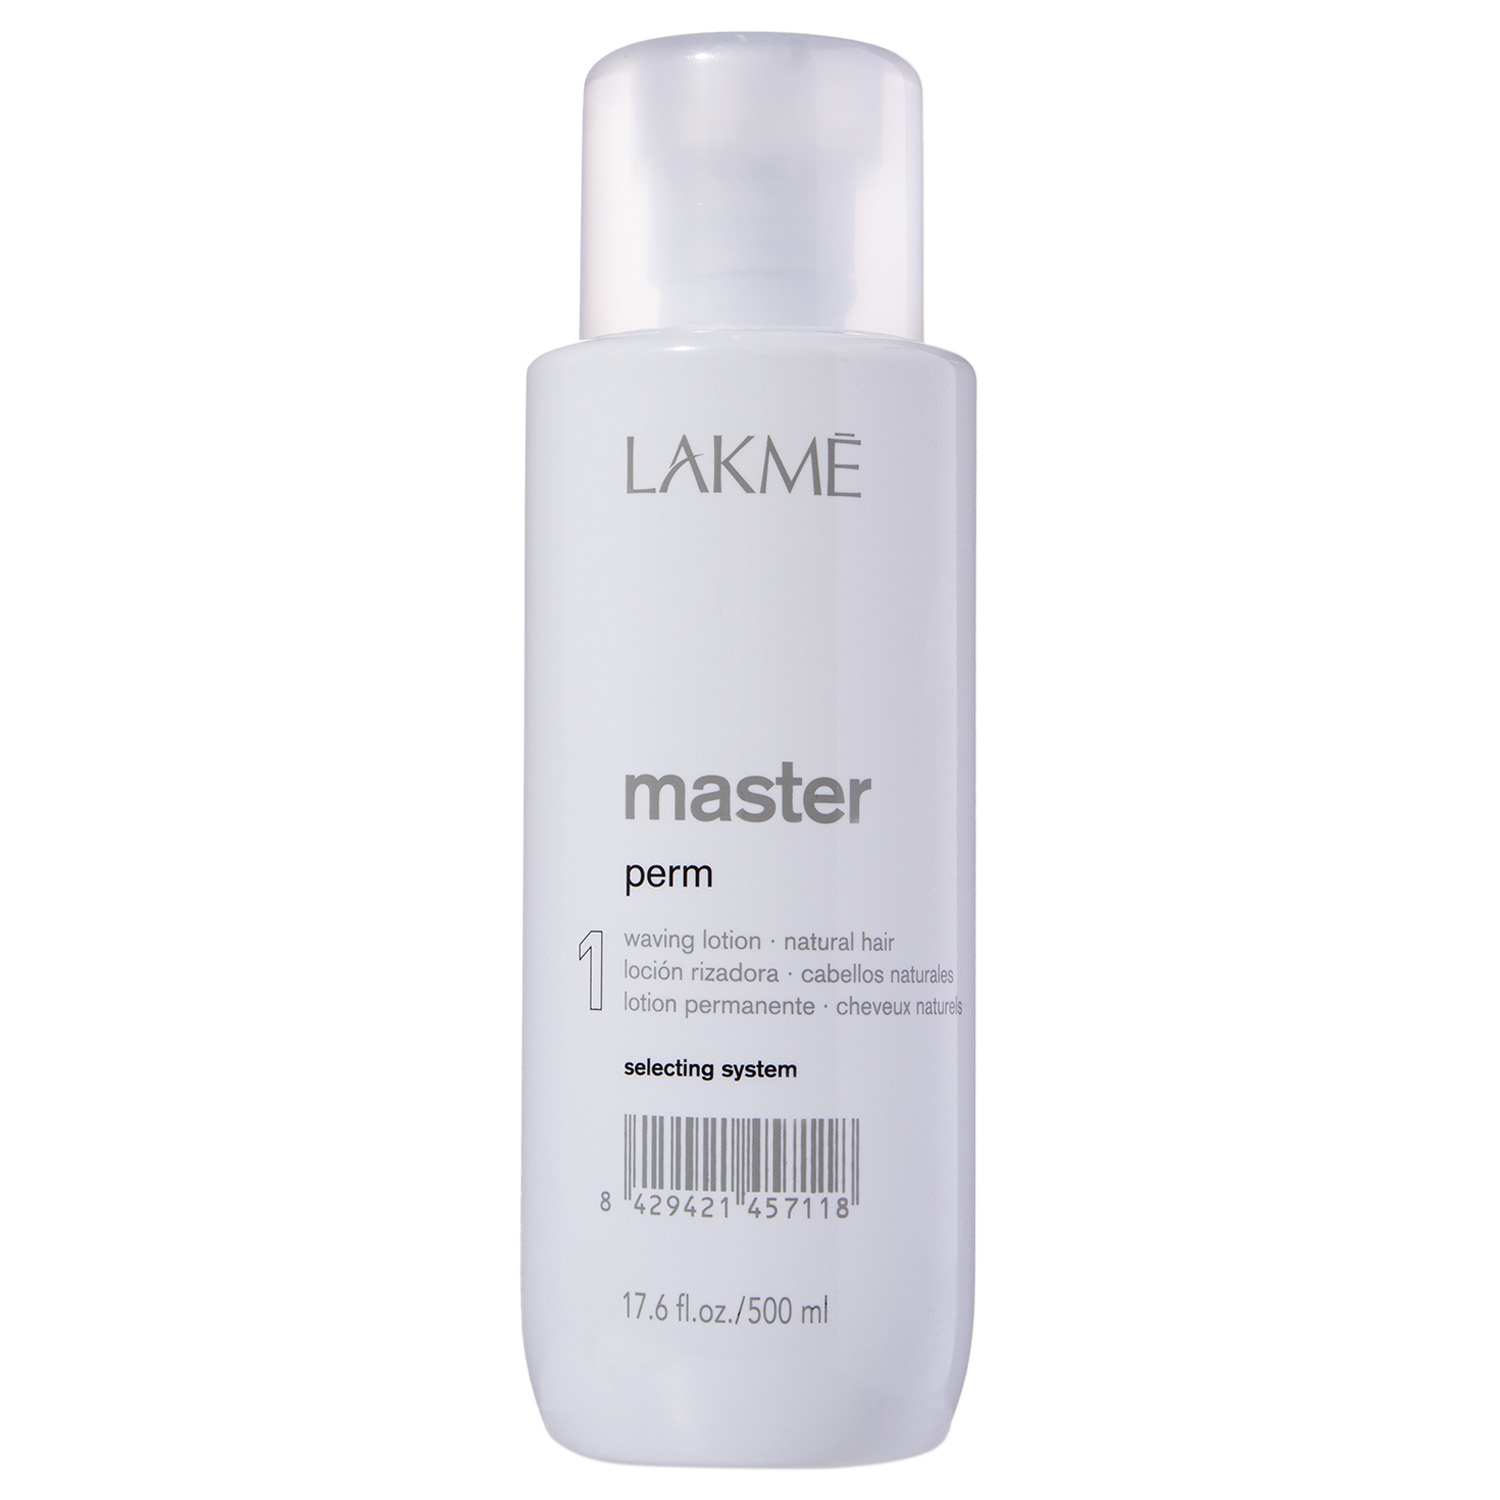 Lakme Лосьон для завивки нормальных волос 1 Perm Waving Lotion 1, 500 мл (Lakme, Master)